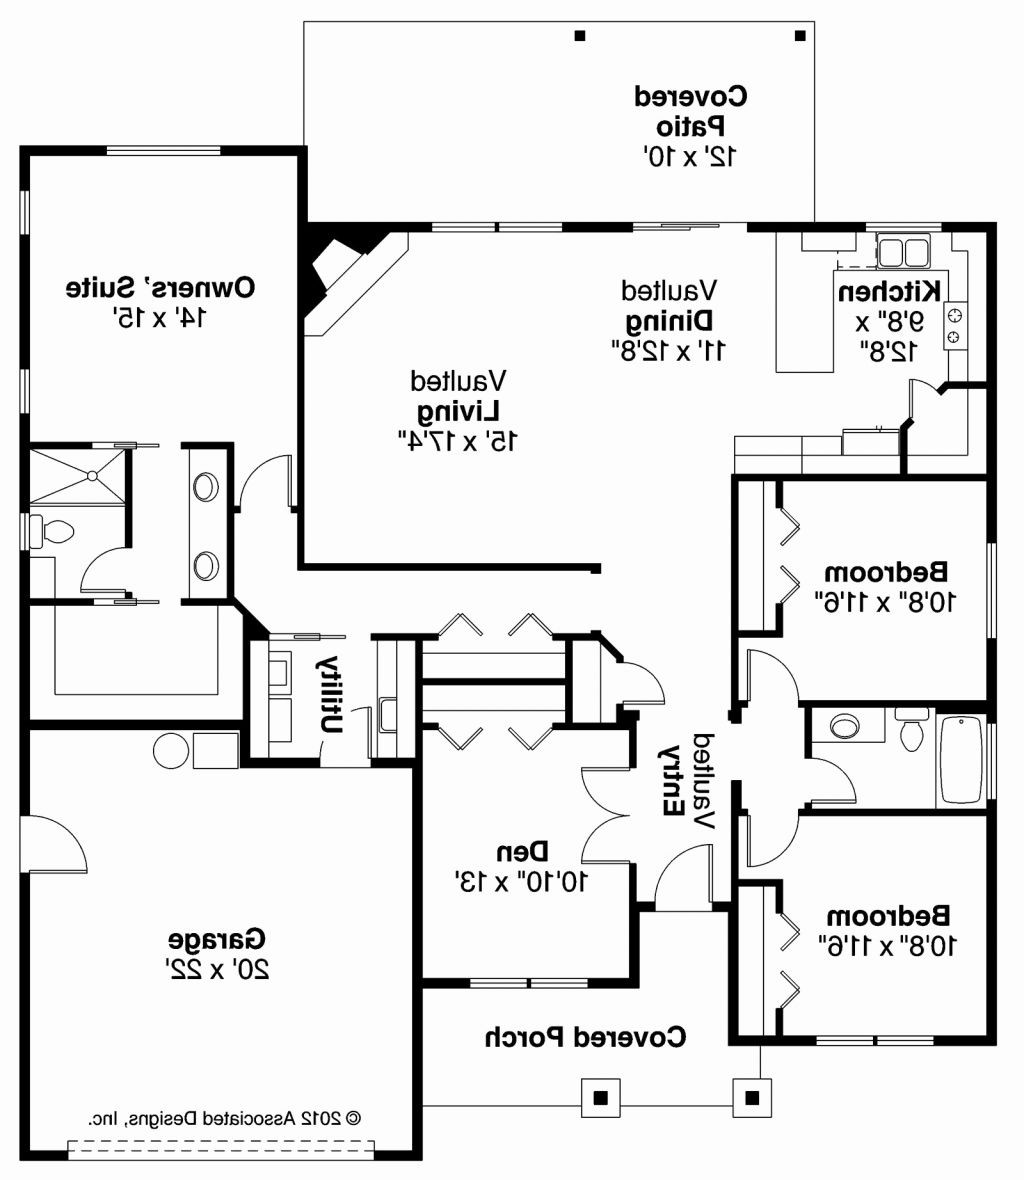 Electrical House Wiring Series Wiring Diagram Fresh House Wiring Diagram Electrical Floor Plan 2004 2010